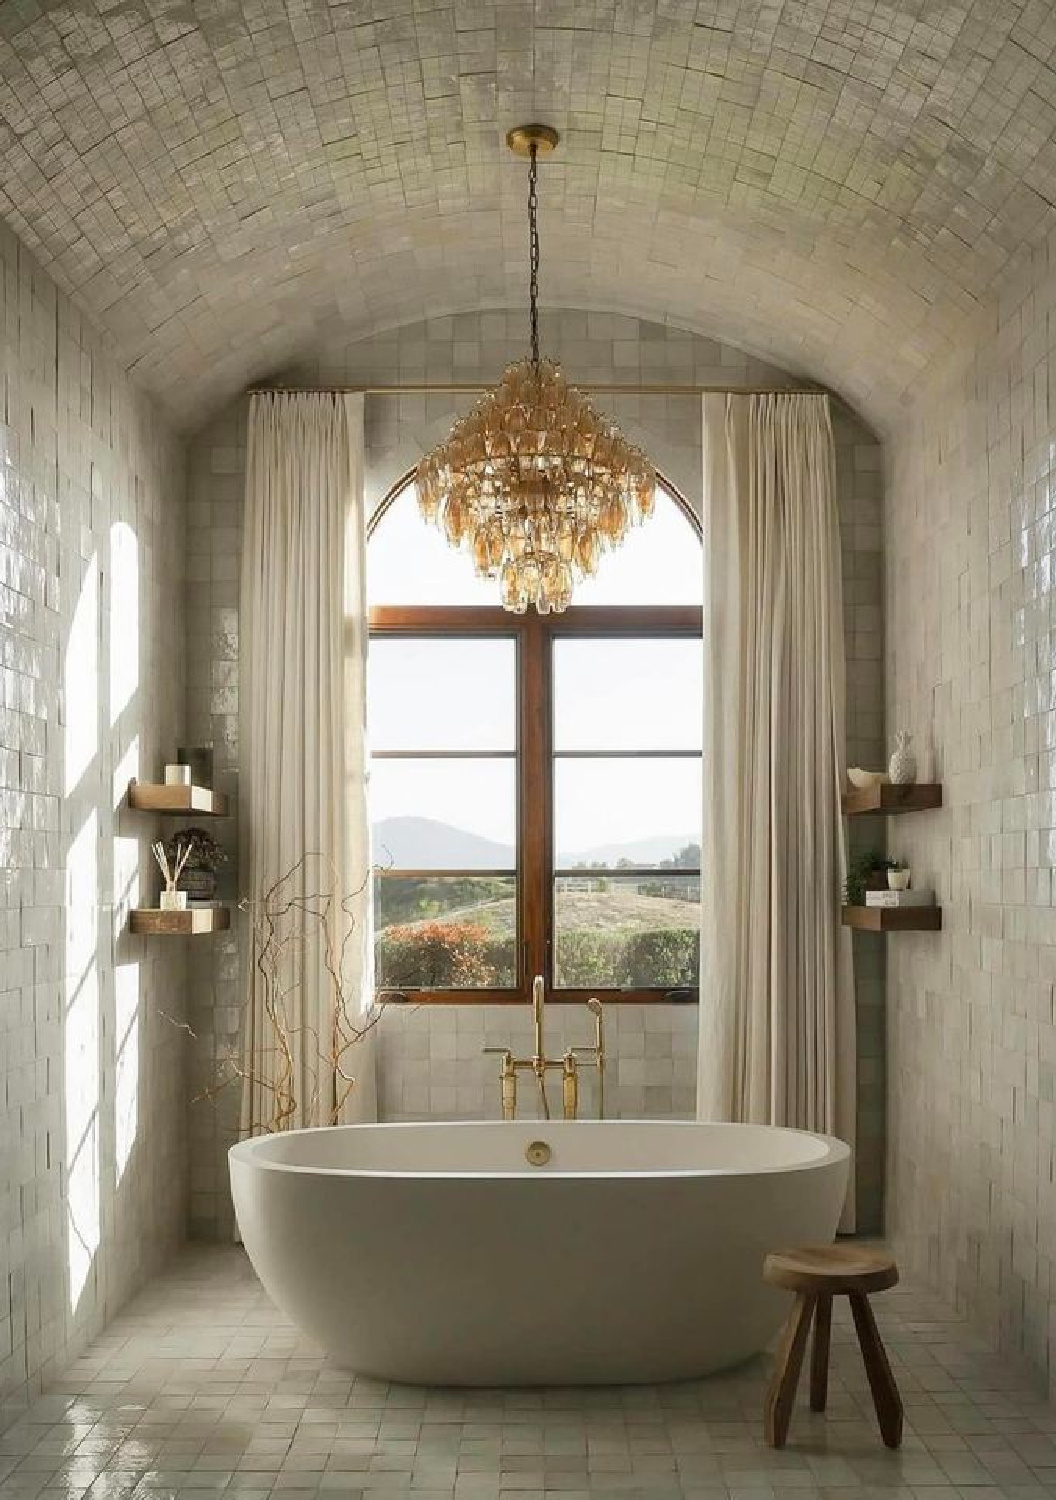 Luxurious fantasy bath with tiled walls & barrel ceiling. AI Design via Whitney Hess (Just Decorate!). #aidesign #aiinteriordesign #aiarchitecture #aibathroom